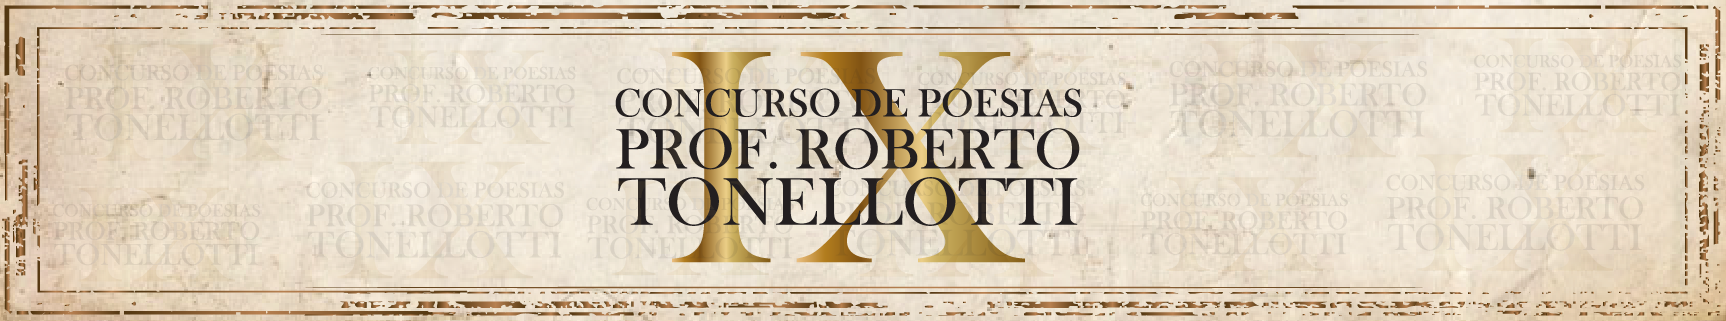 Lista de inscritos do IX Concurso de Poesias “Professor Roberto Tonellotti” 2019